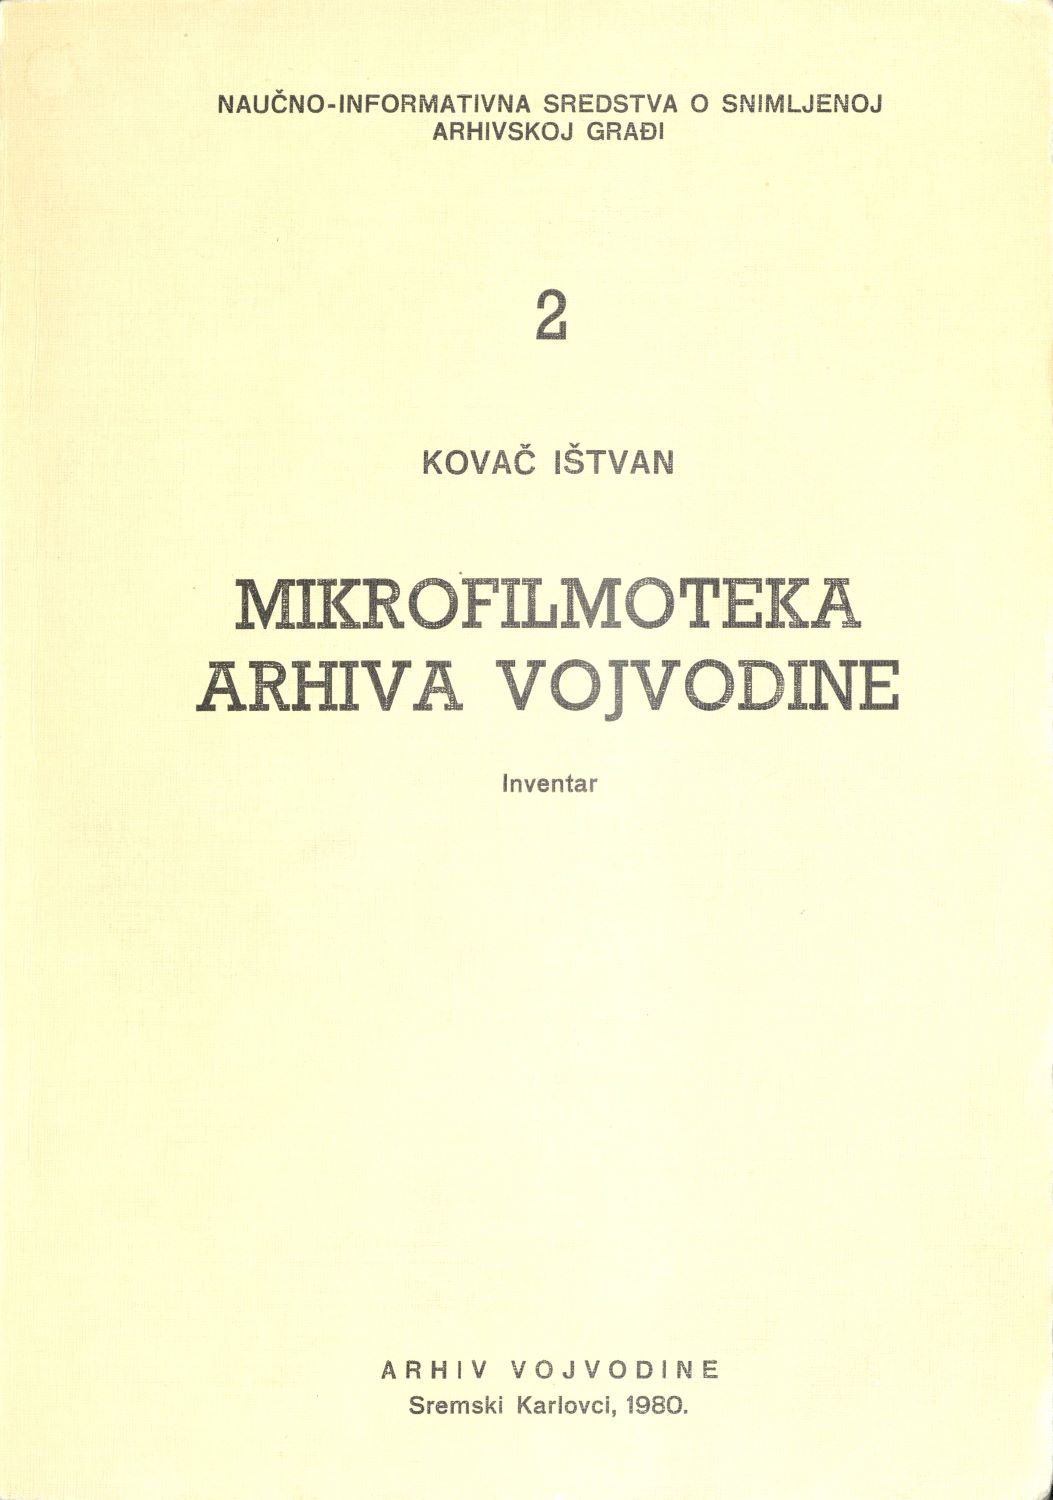 Kovač, Ištvan: Mikrofilmoteka Arhiva Vojvodine. Naučno-informativna sredstva o snimljenoj arhivskoj građi (inventari), Br. 2. Arhiv Vojvodine, Sremski Karlovci 1980.